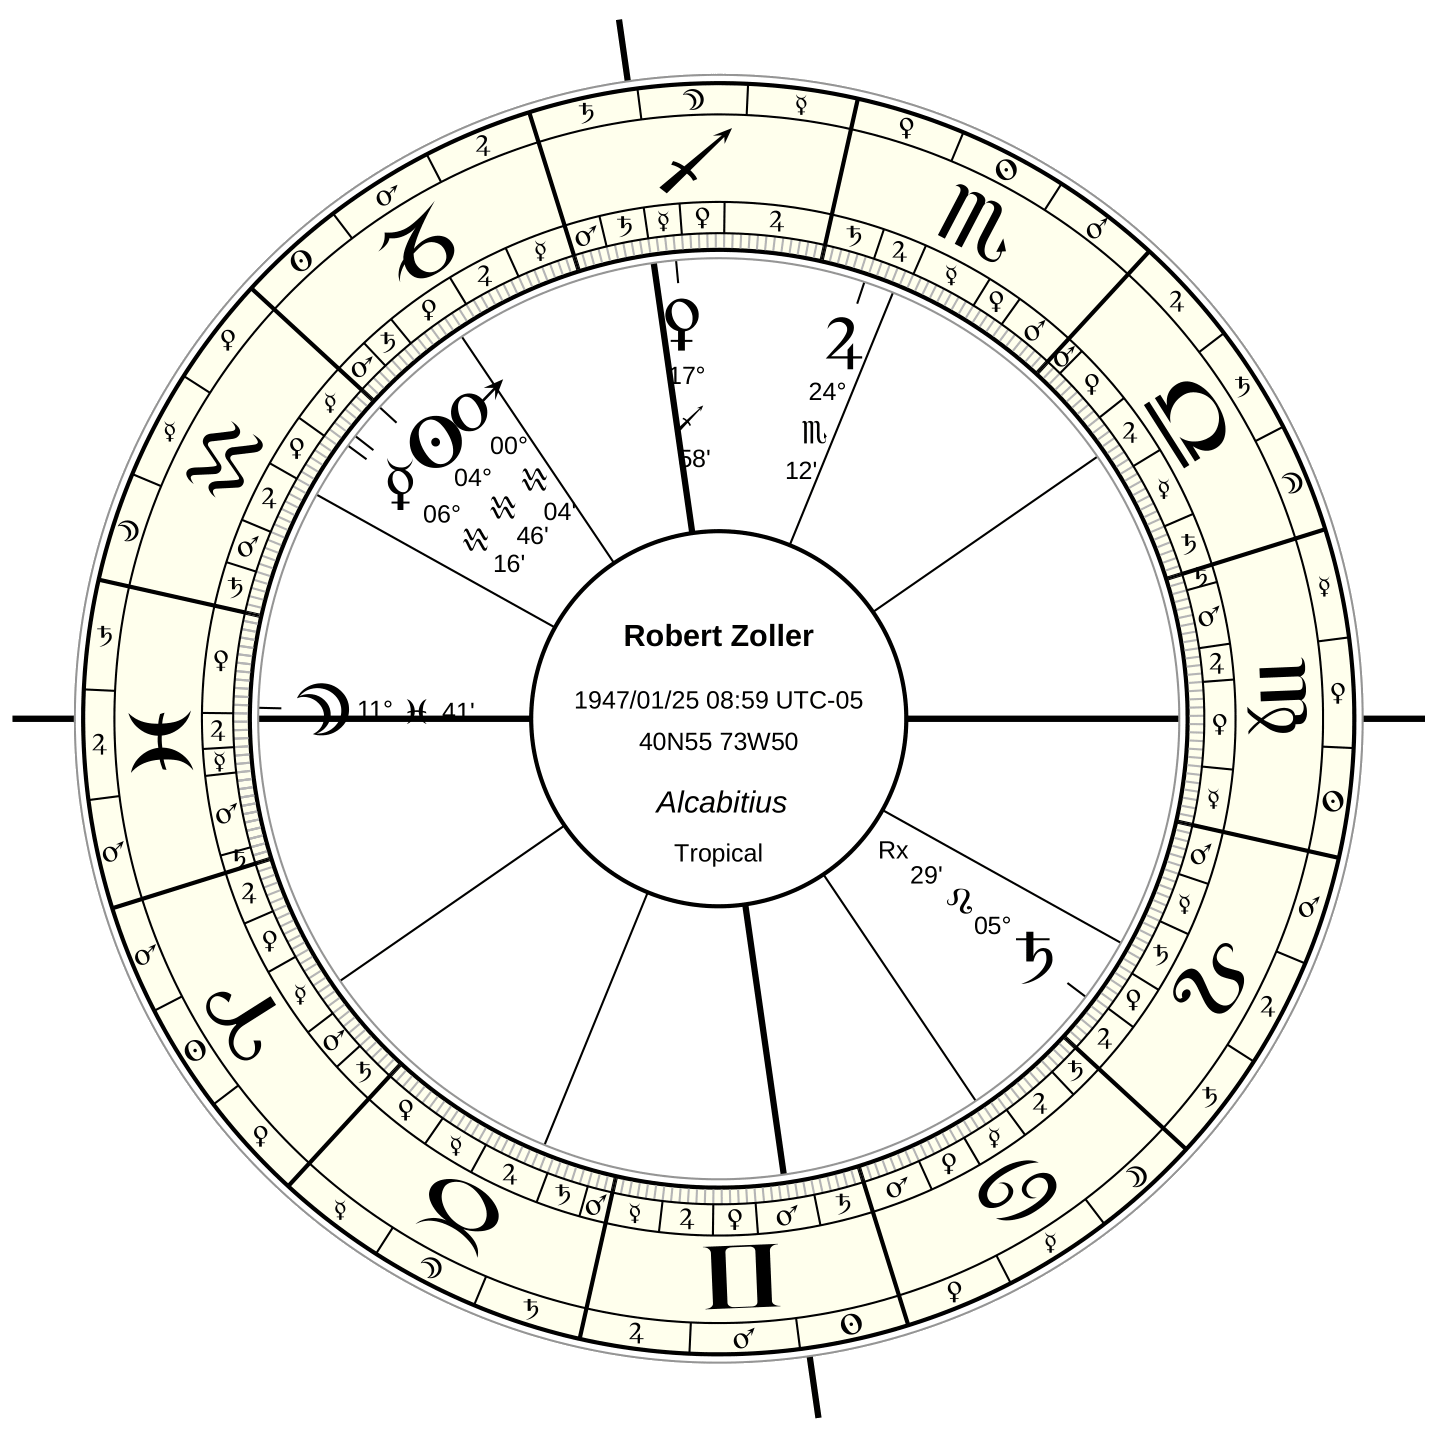 For astrologers – Martin Gansten